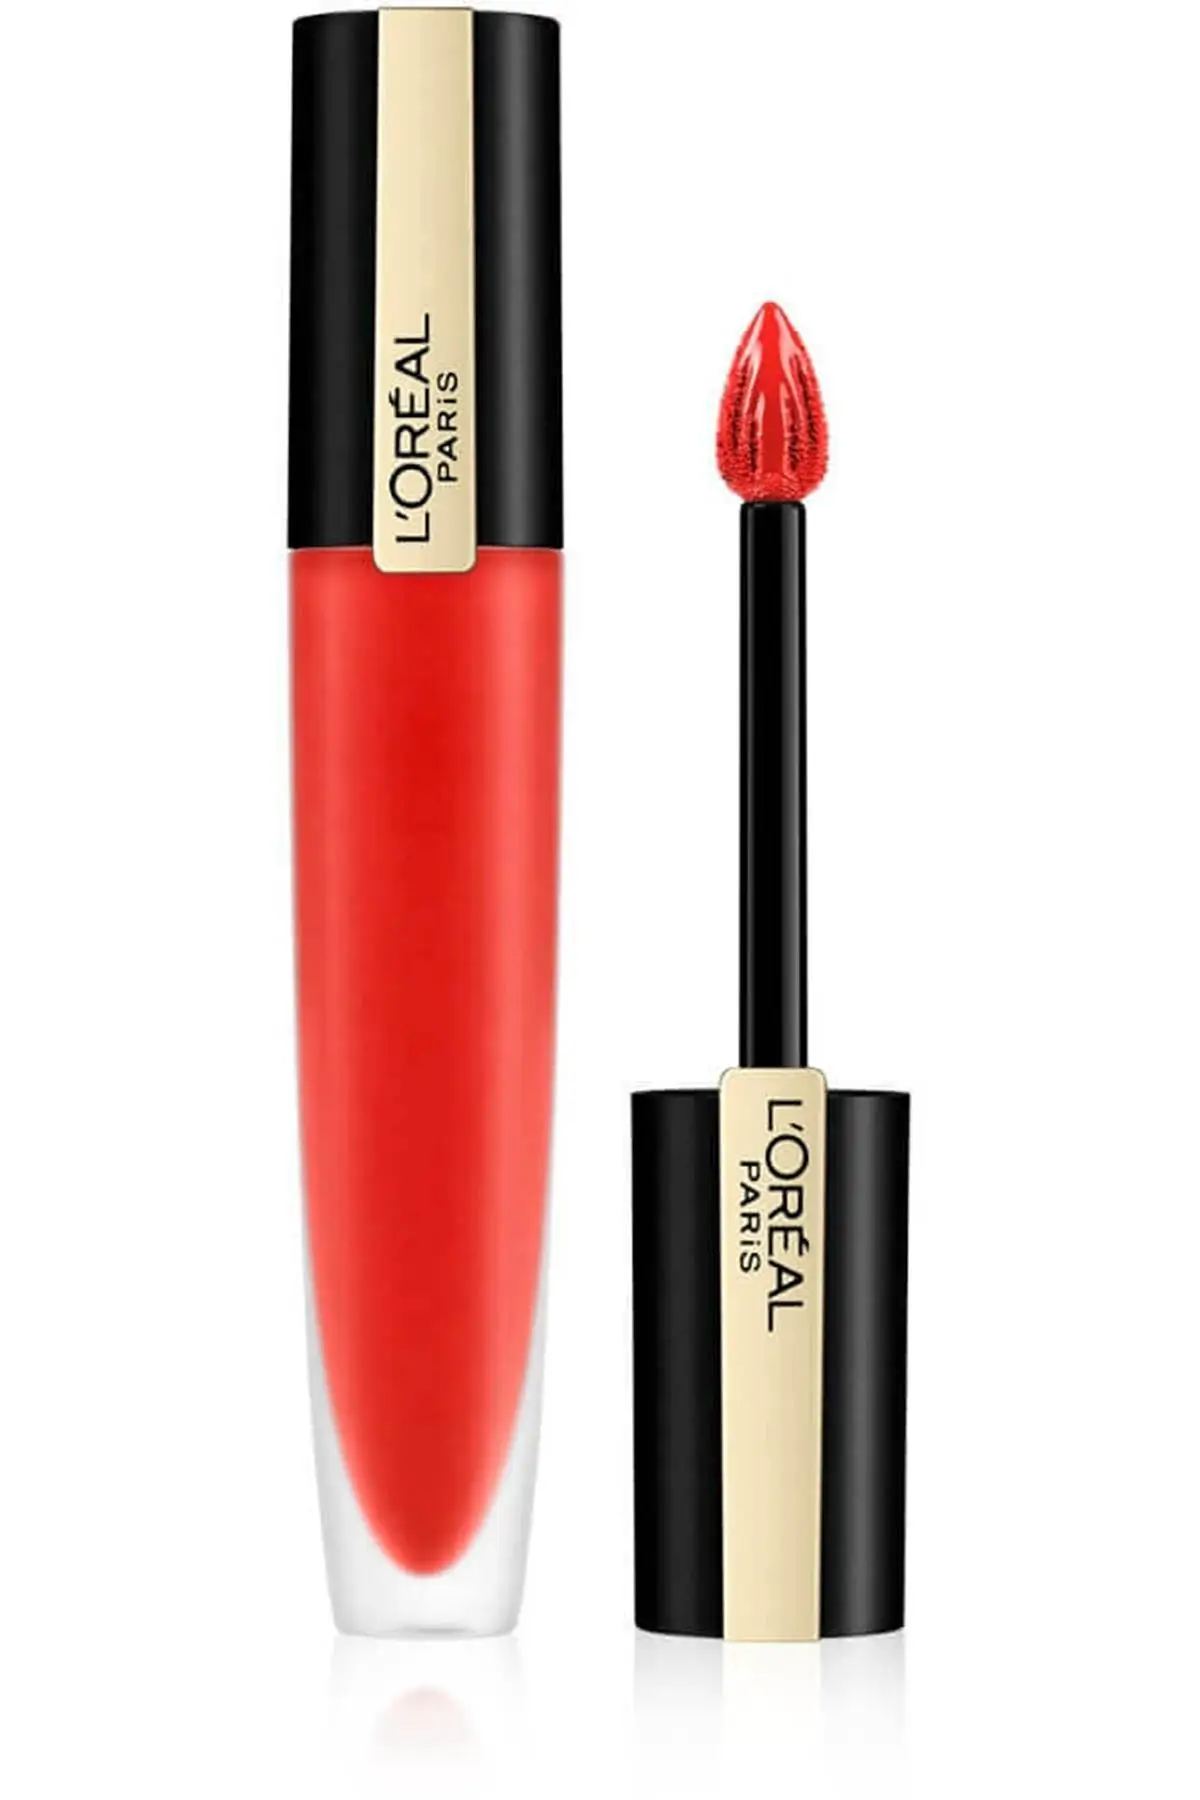 

Brand: L'Oreal Paris Rouge Signature Liquid Lipstick No:113 Category: Lipstick